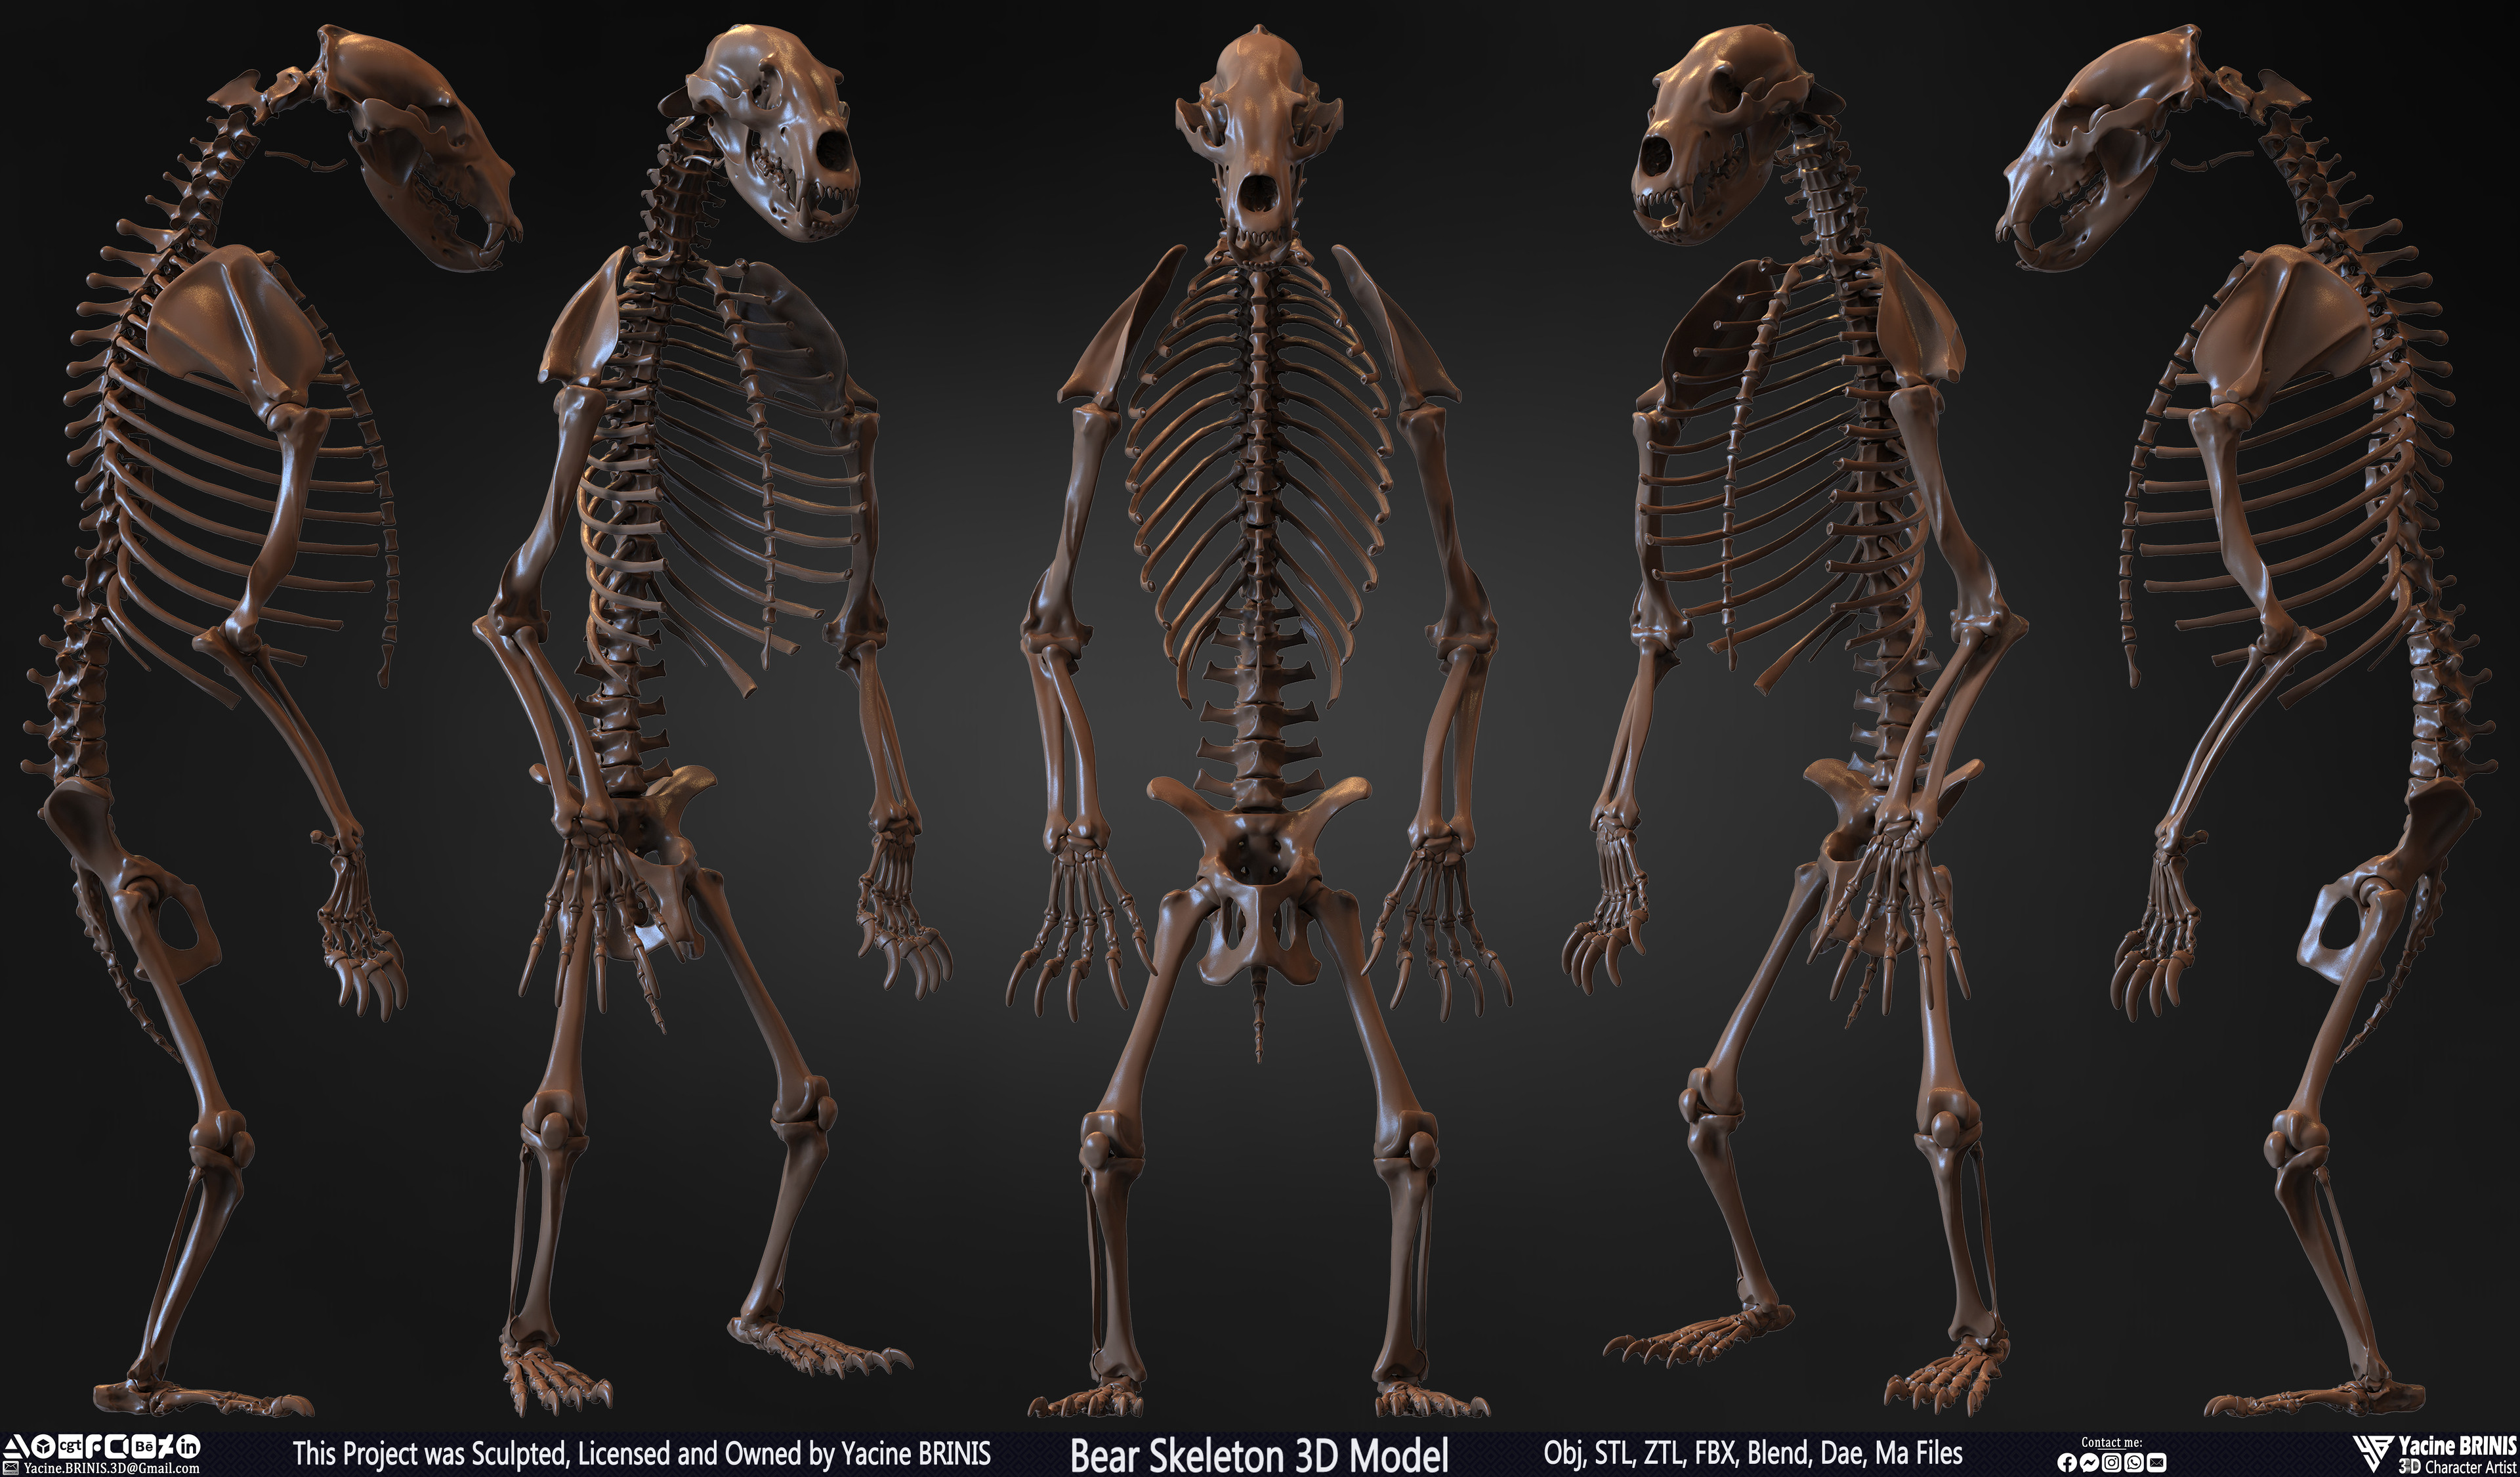 Bear Skeleton 3D Model Sculpted by Yacine BRINIS Set 002